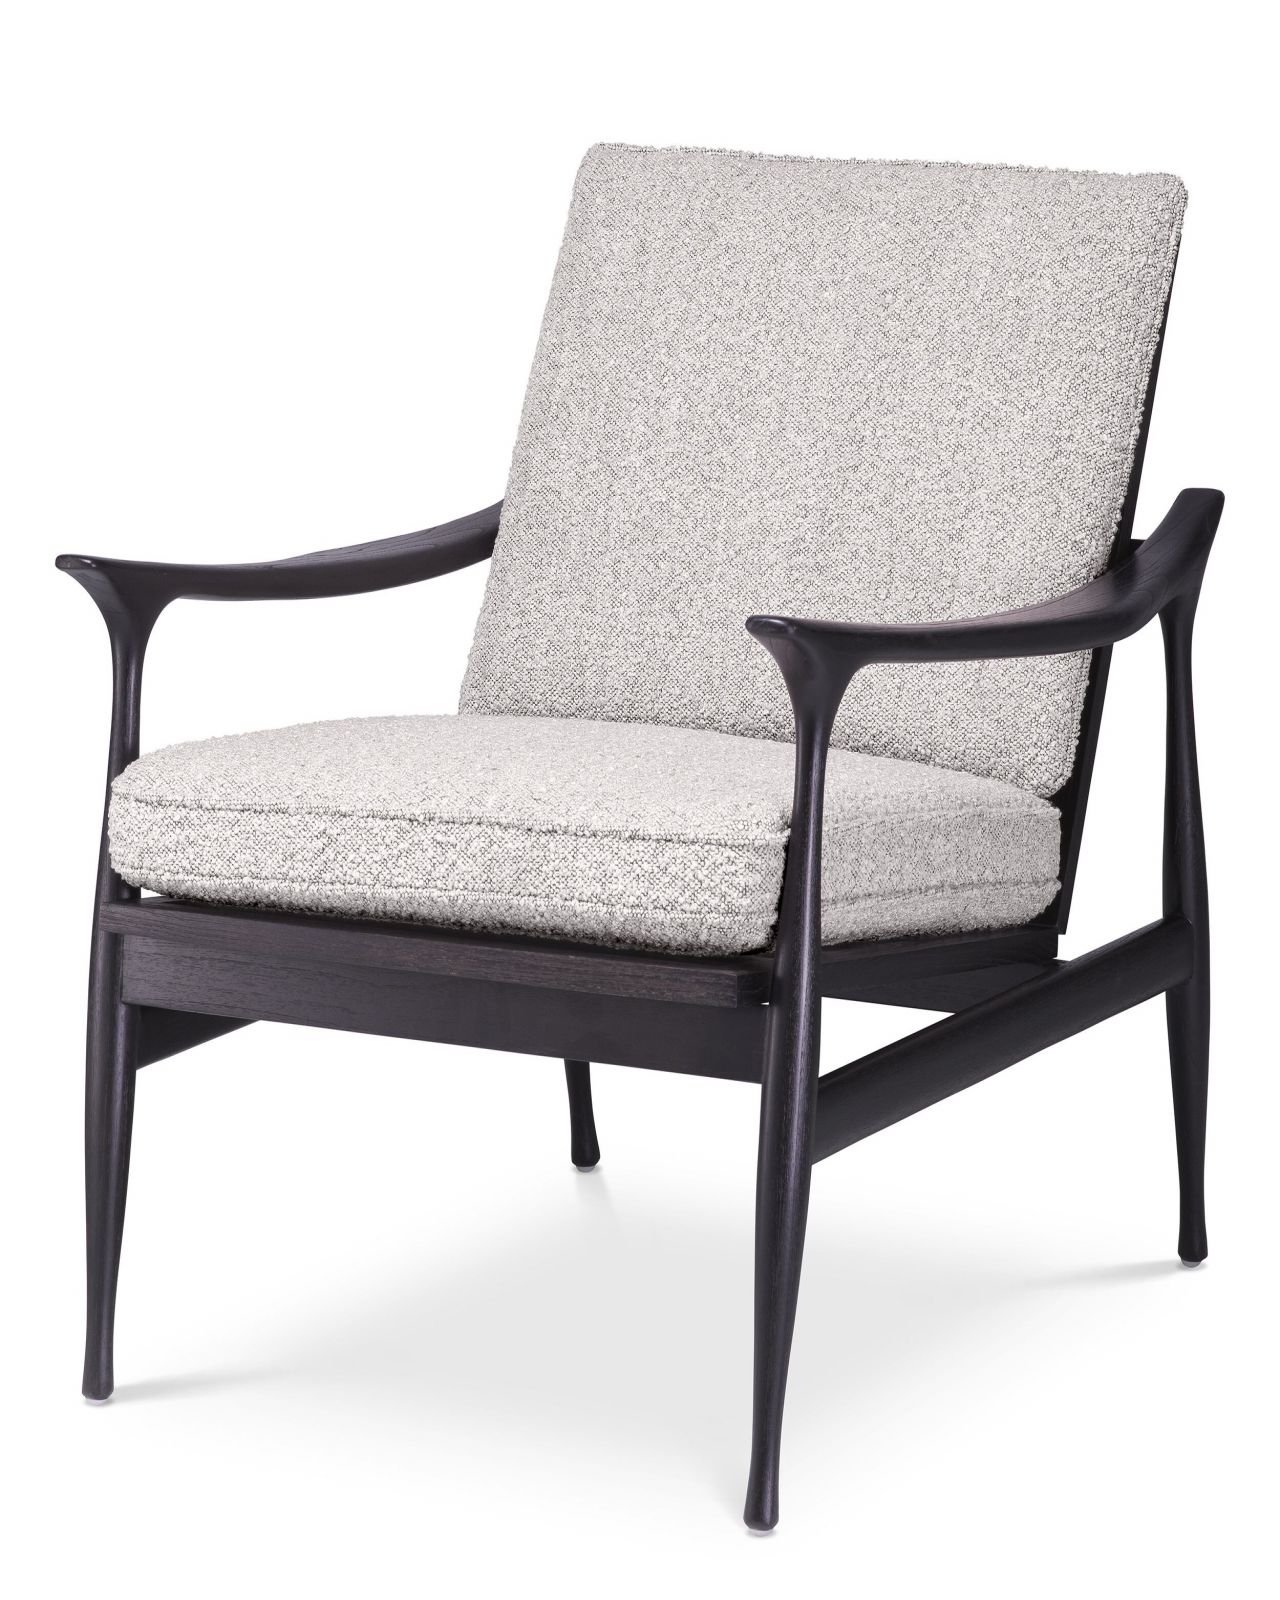 Chair Manzo bouclé grey